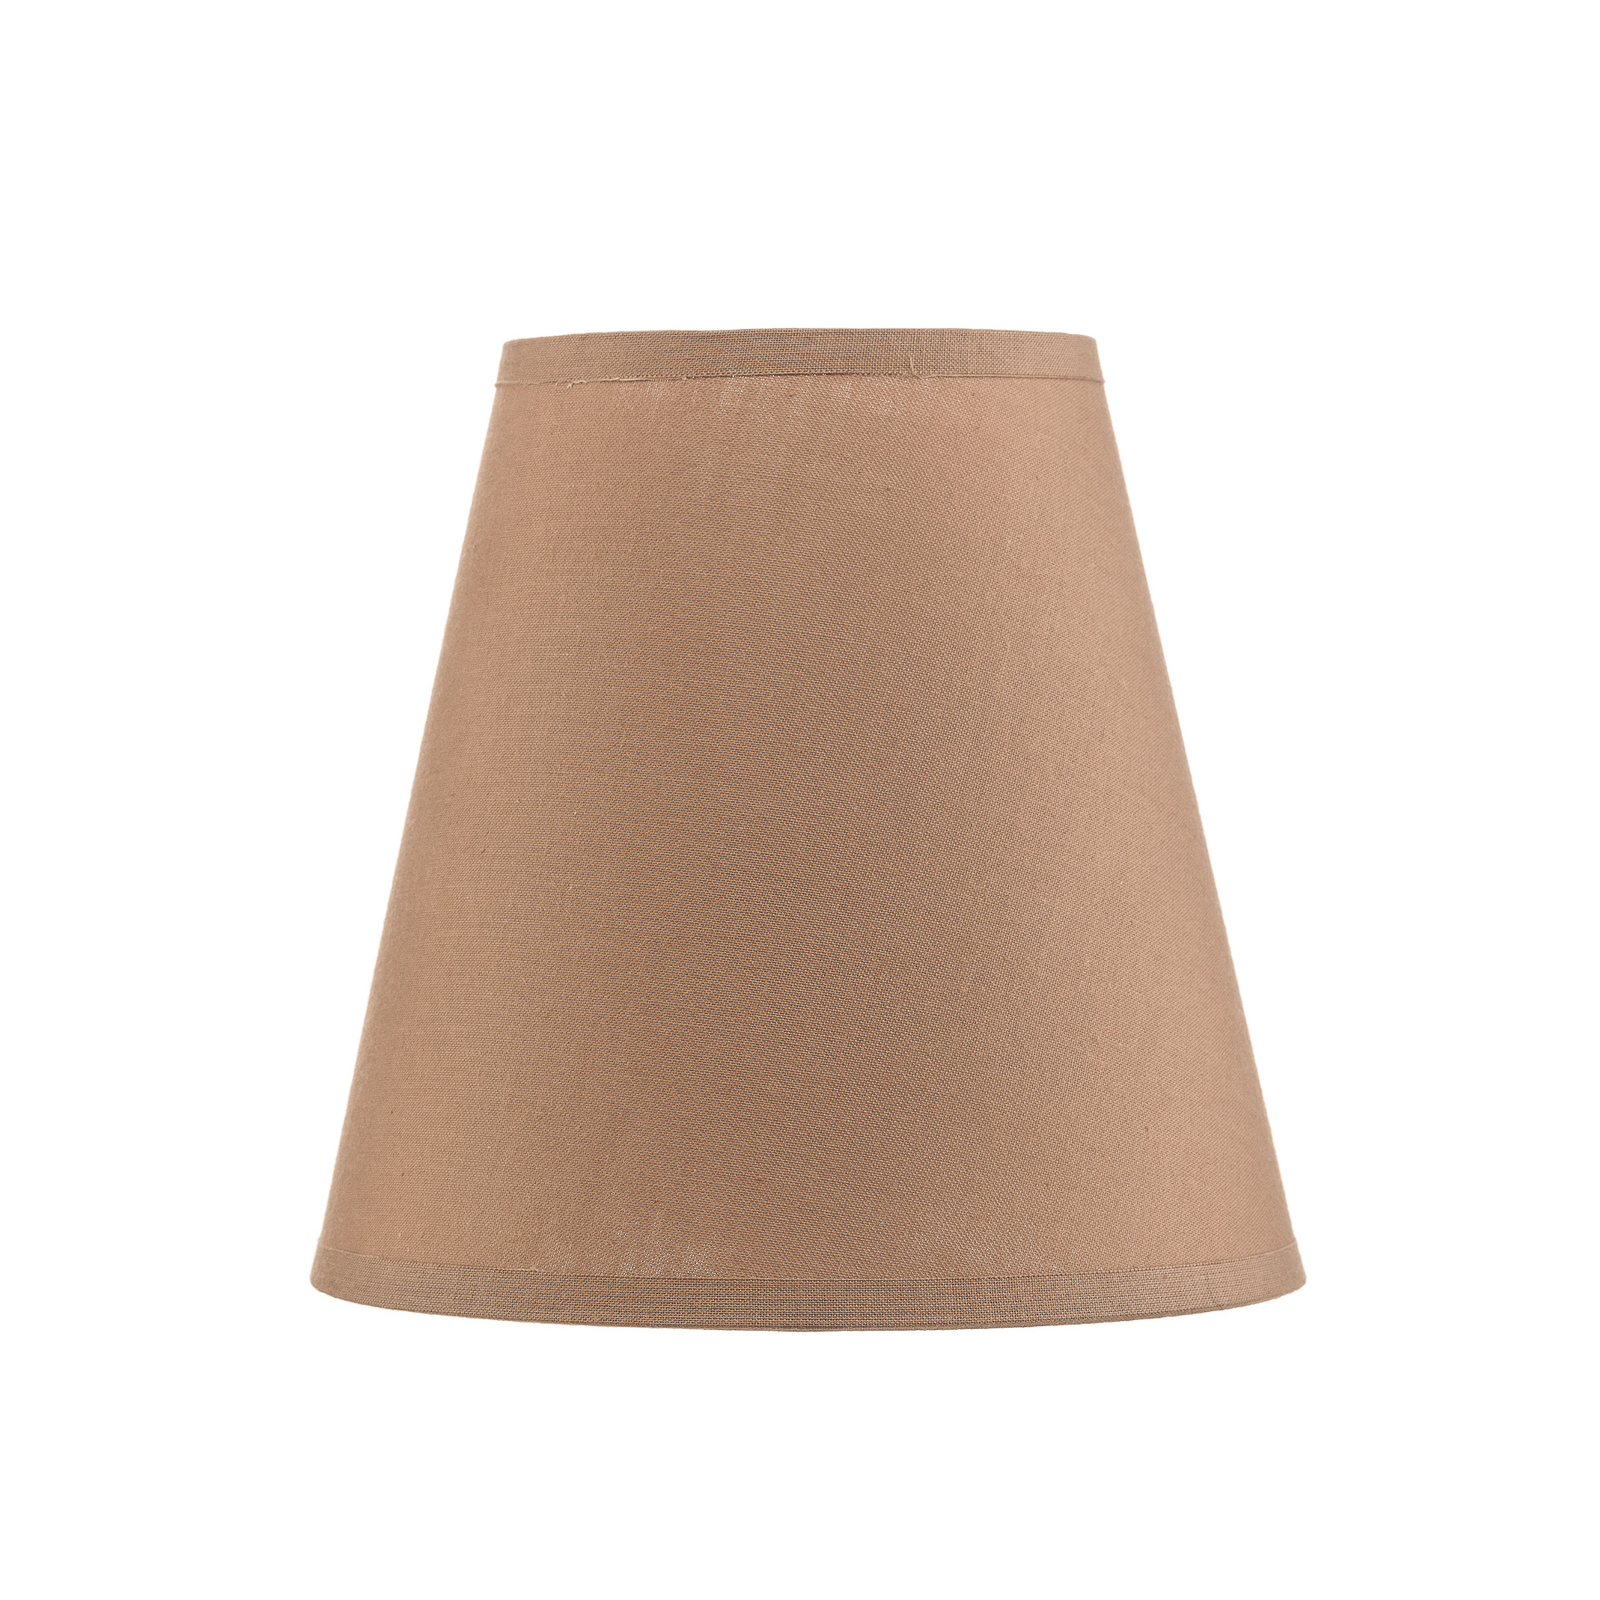 Cone AB lampshade, Ø 15 cm, cappuccino